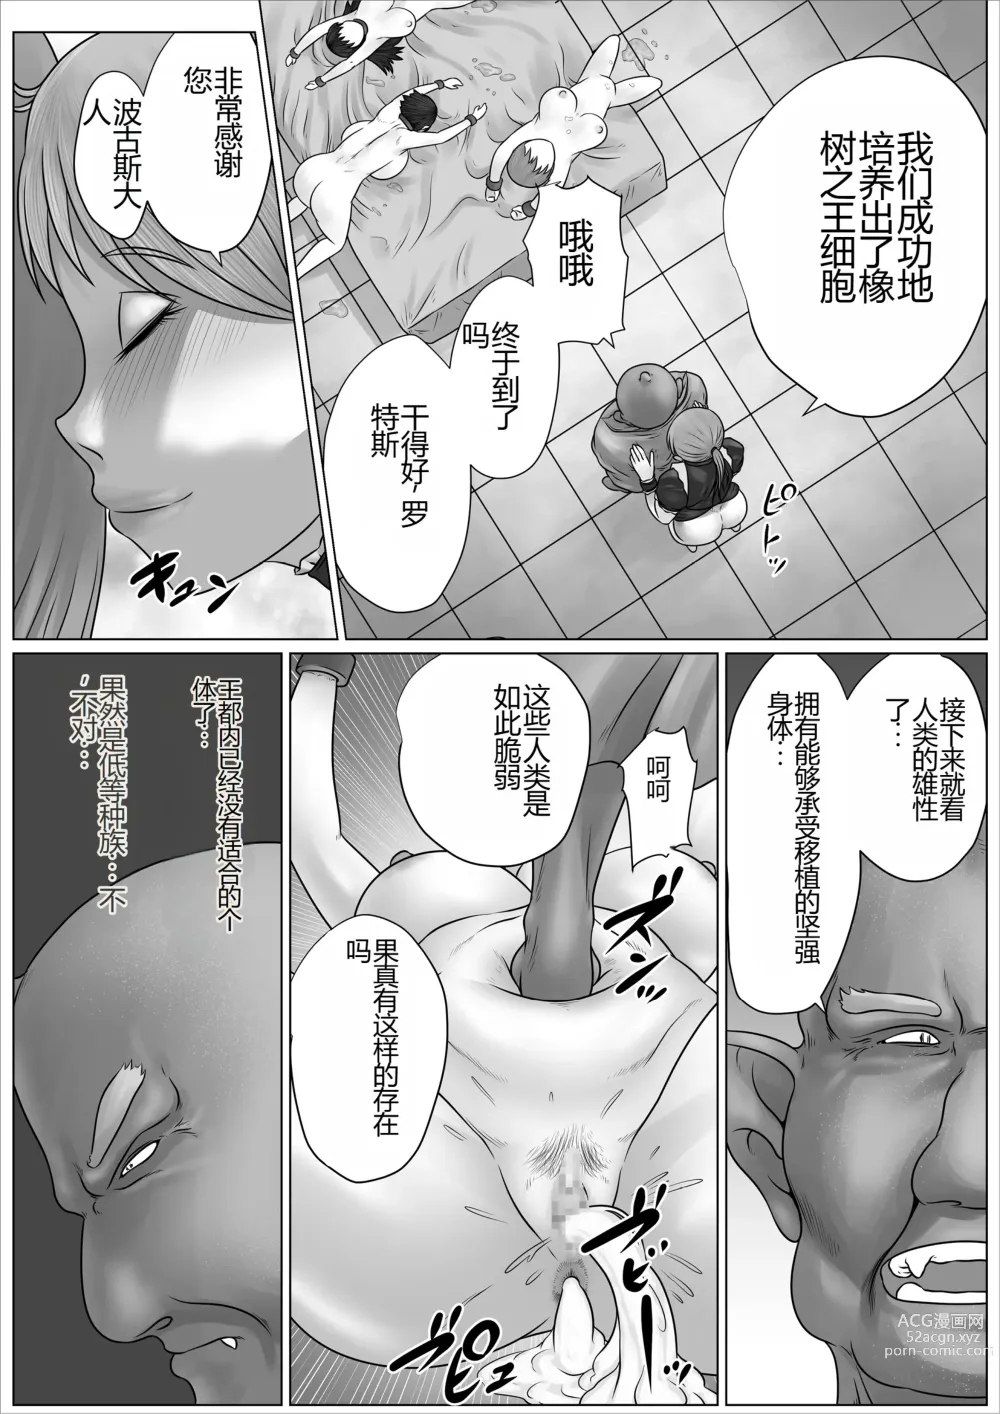 Page 12 of doujinshi 被誉为英雄的女战士长艾尔拉被改造成淫乱的母猪成为一生奉献做为配种精液便器的故事~扶她篇~